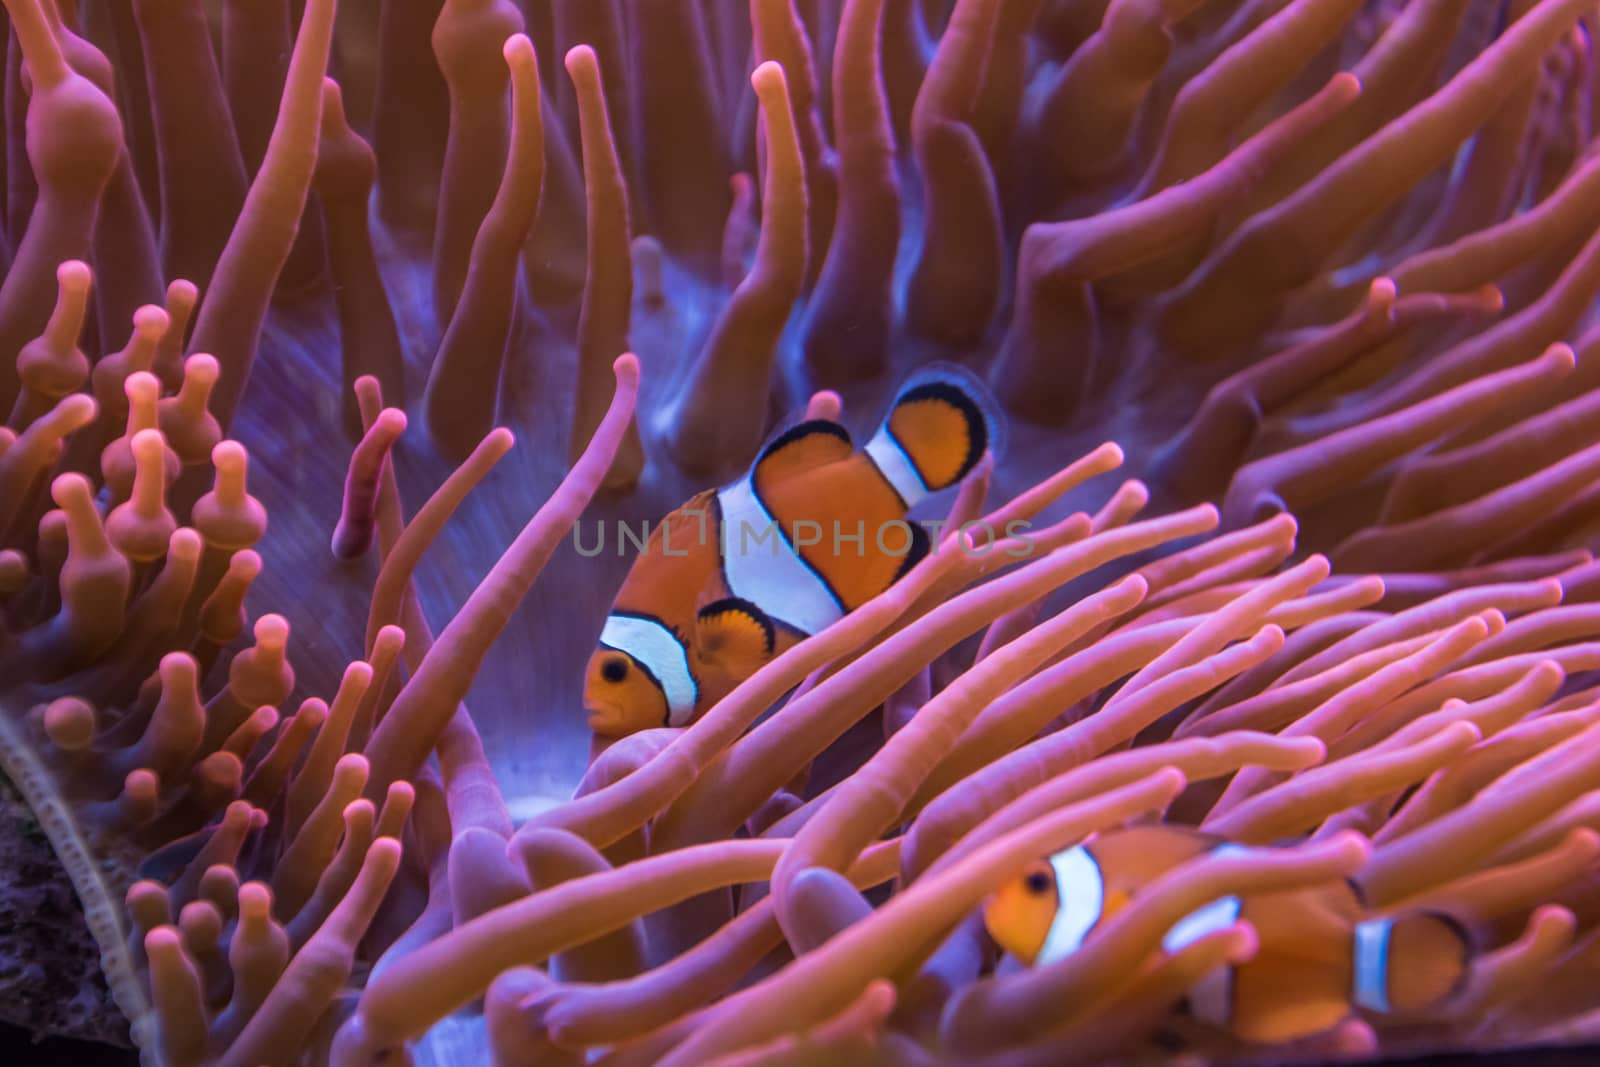 Anemone clown fish orange and white stripes